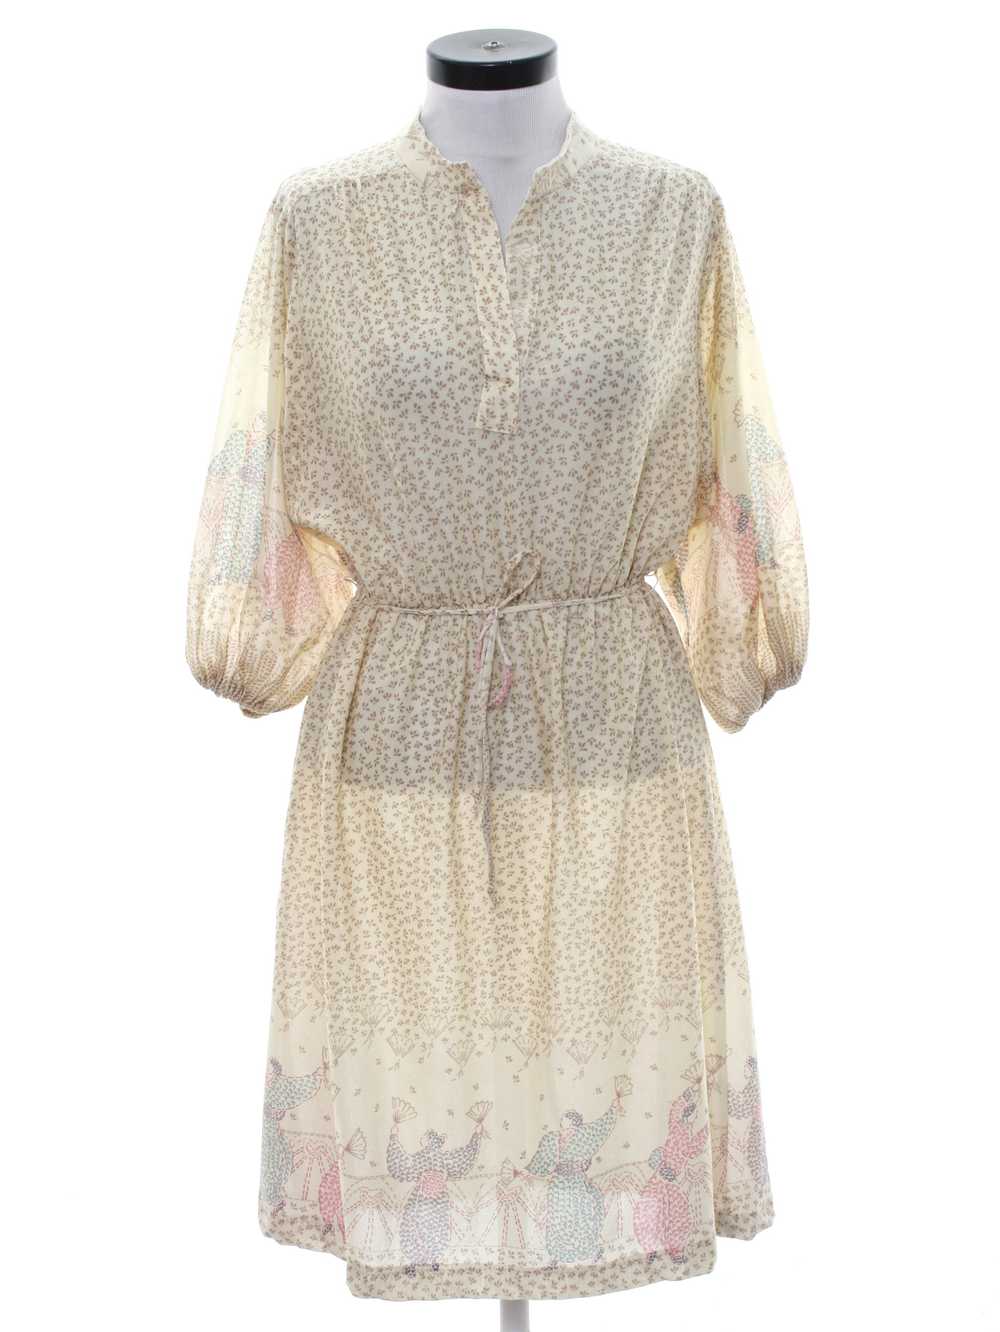 1970's Secretary Dress - image 1